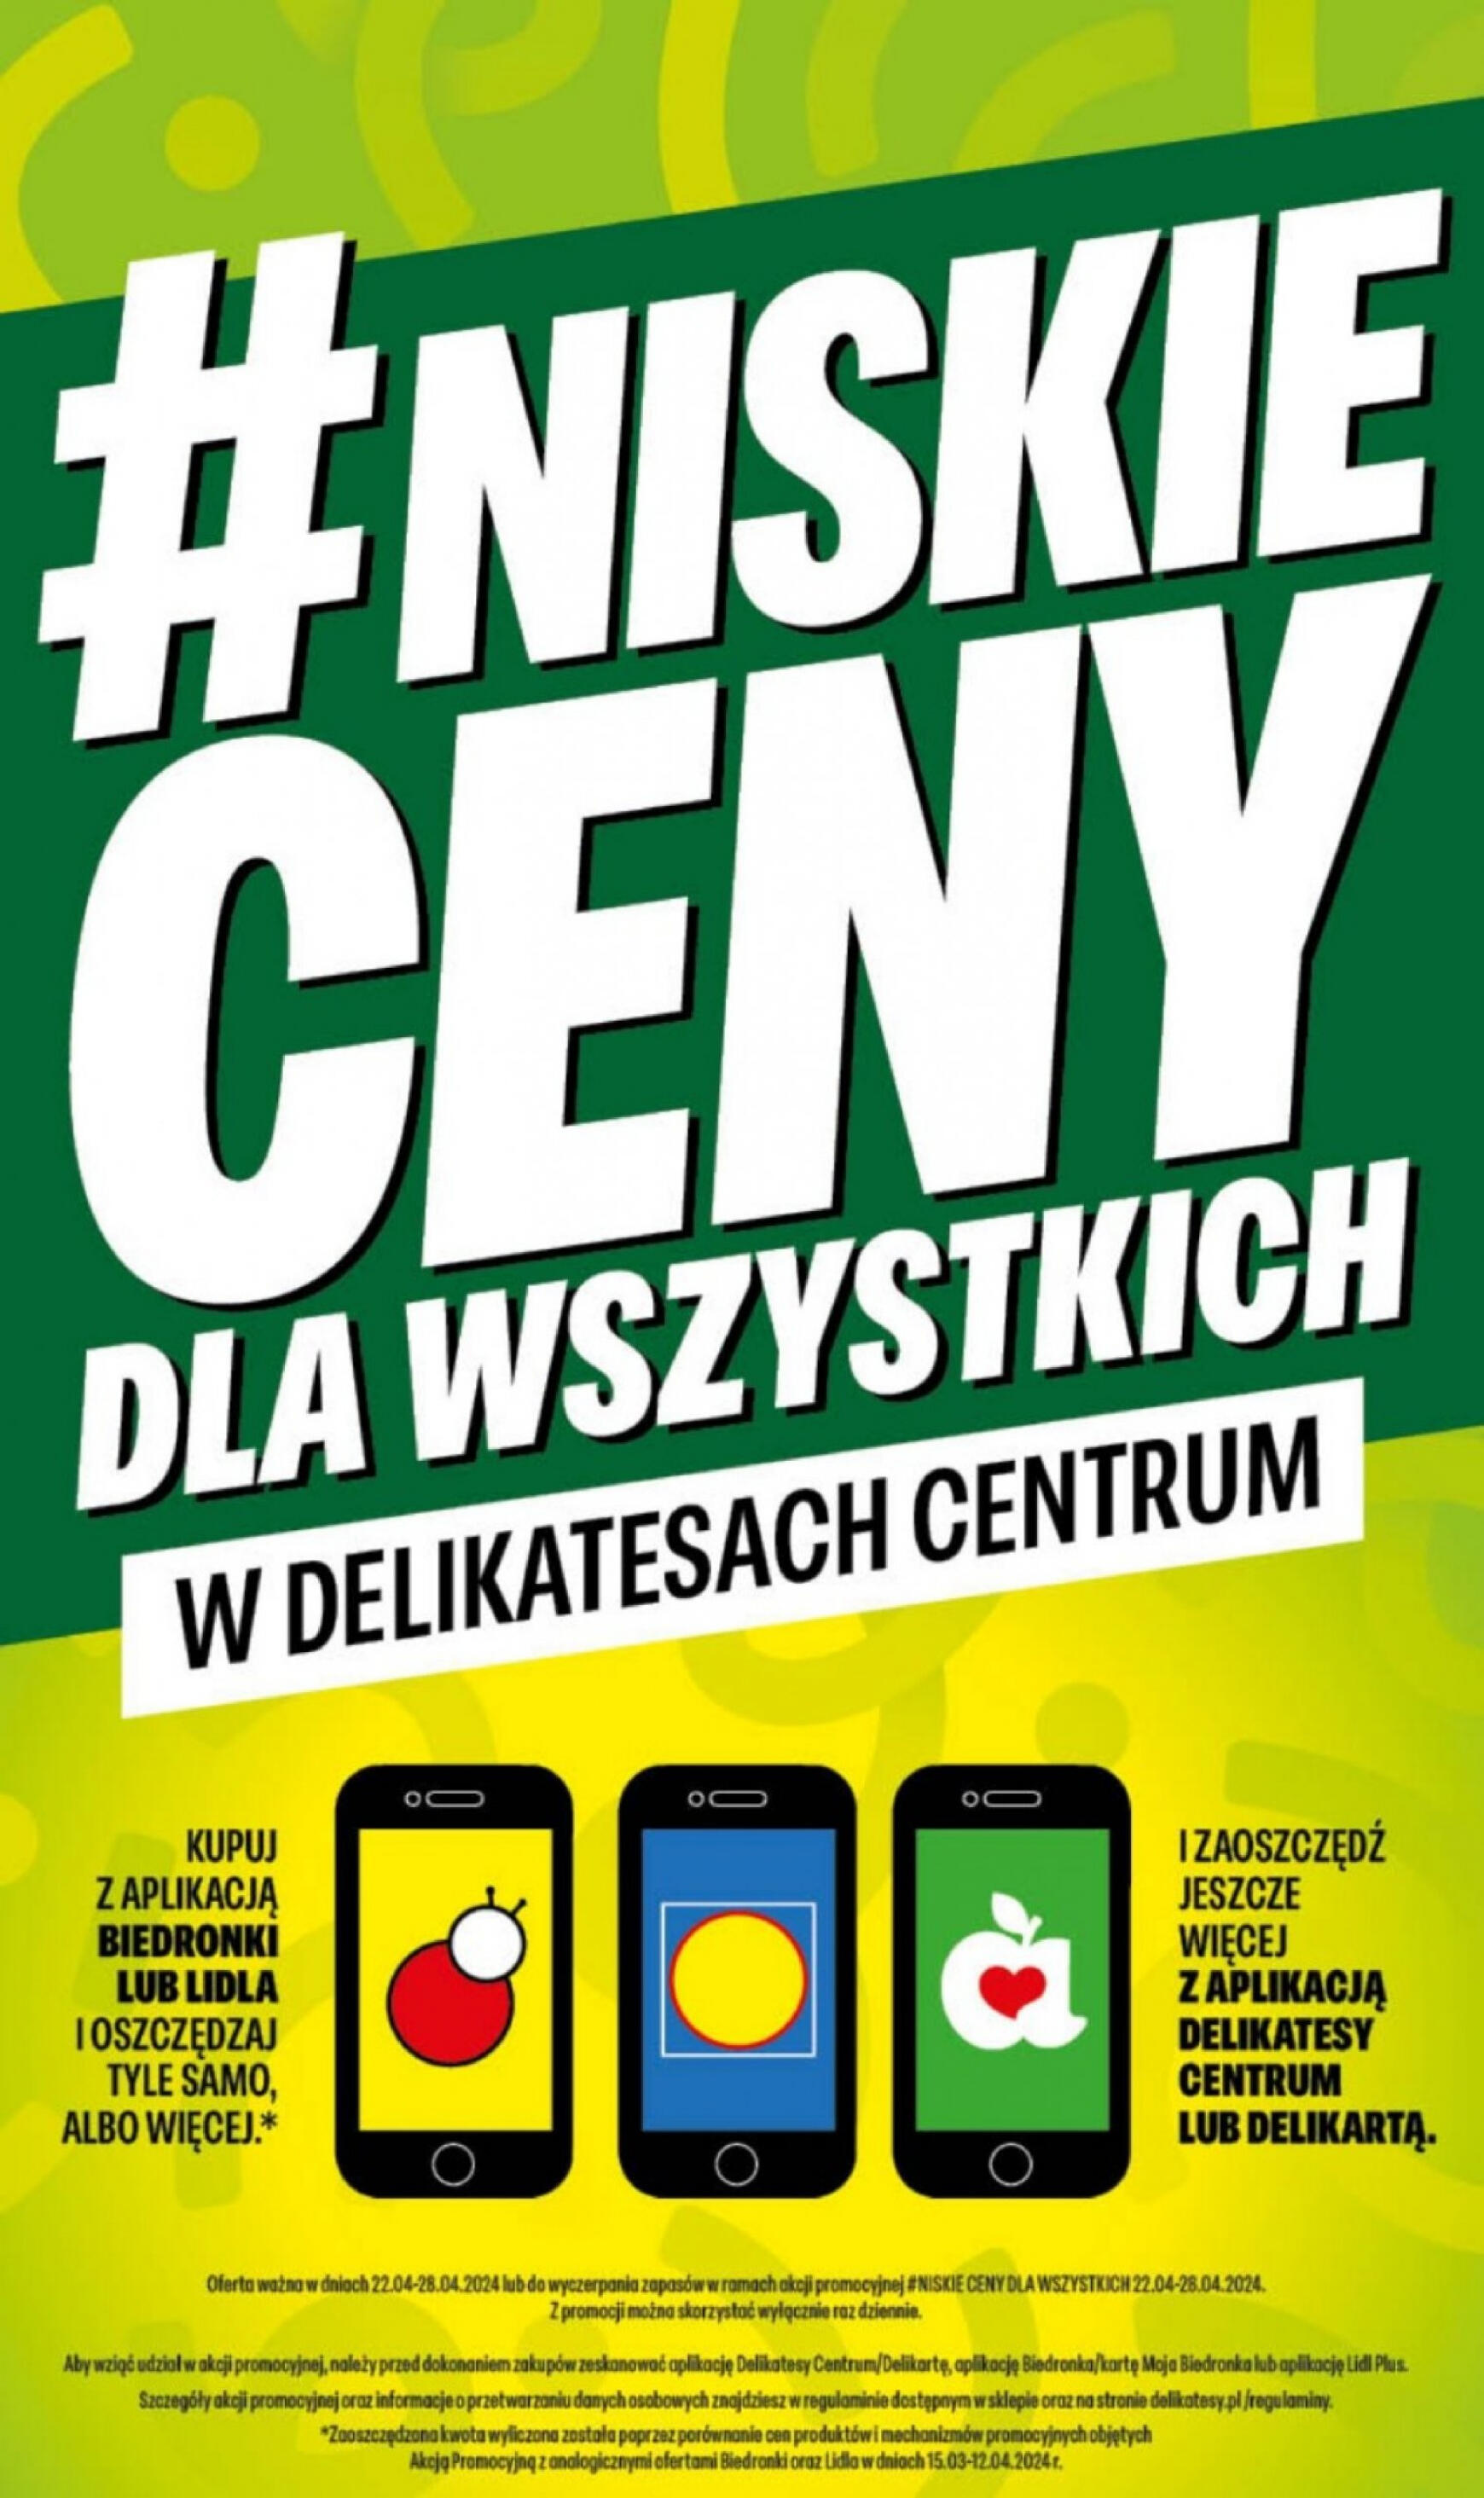 delikatesy-centrum - Delikatesy Centrum gazetka aktualna ważna od 22.04. - 28.04. - page: 2